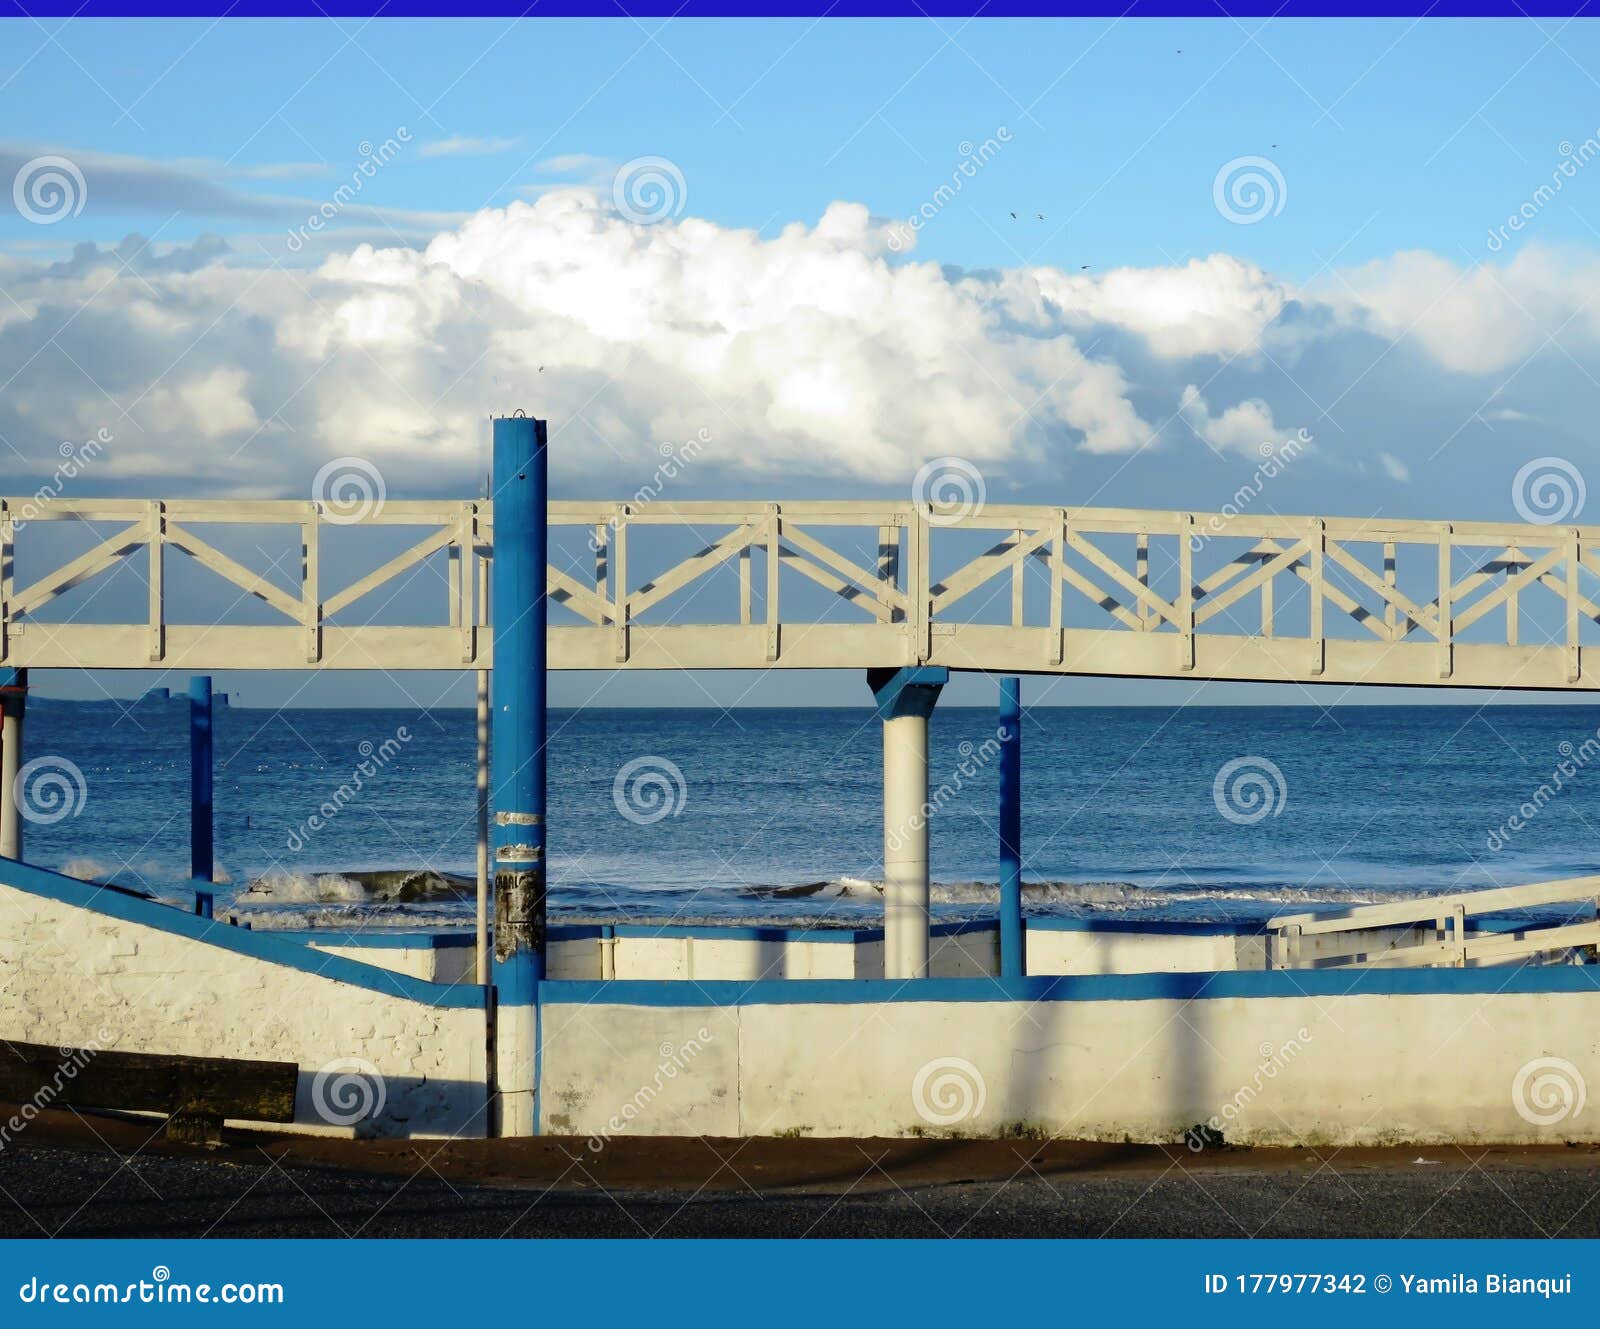 wooden walkway facing the blue sea